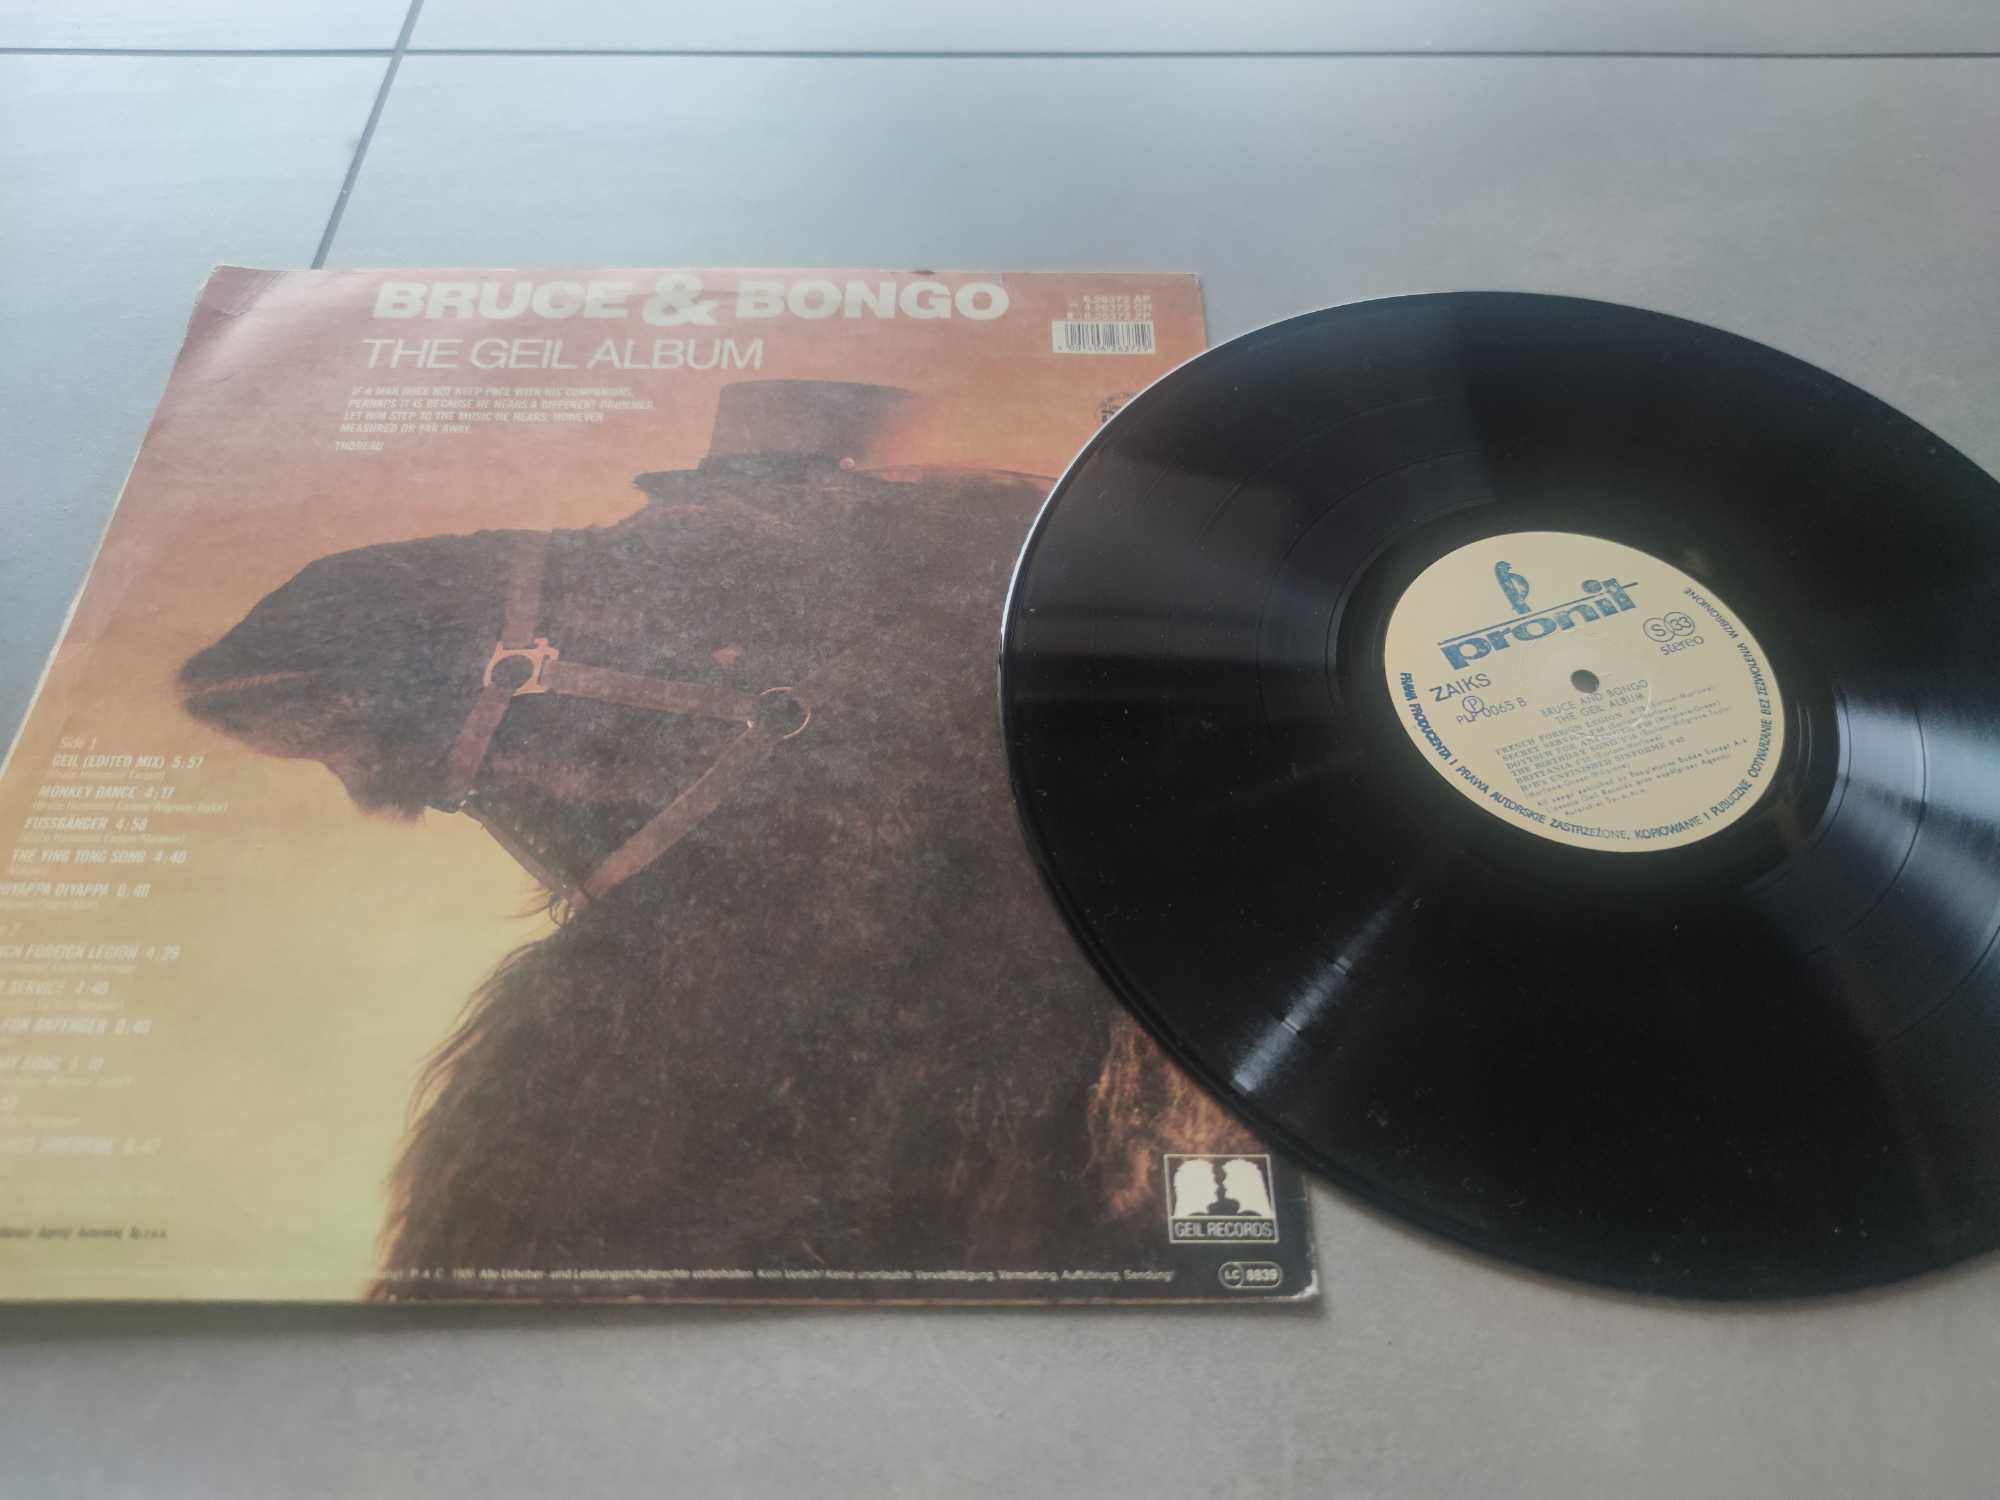 Płyta winylowa Bruce Bongo The Geil Album 1986